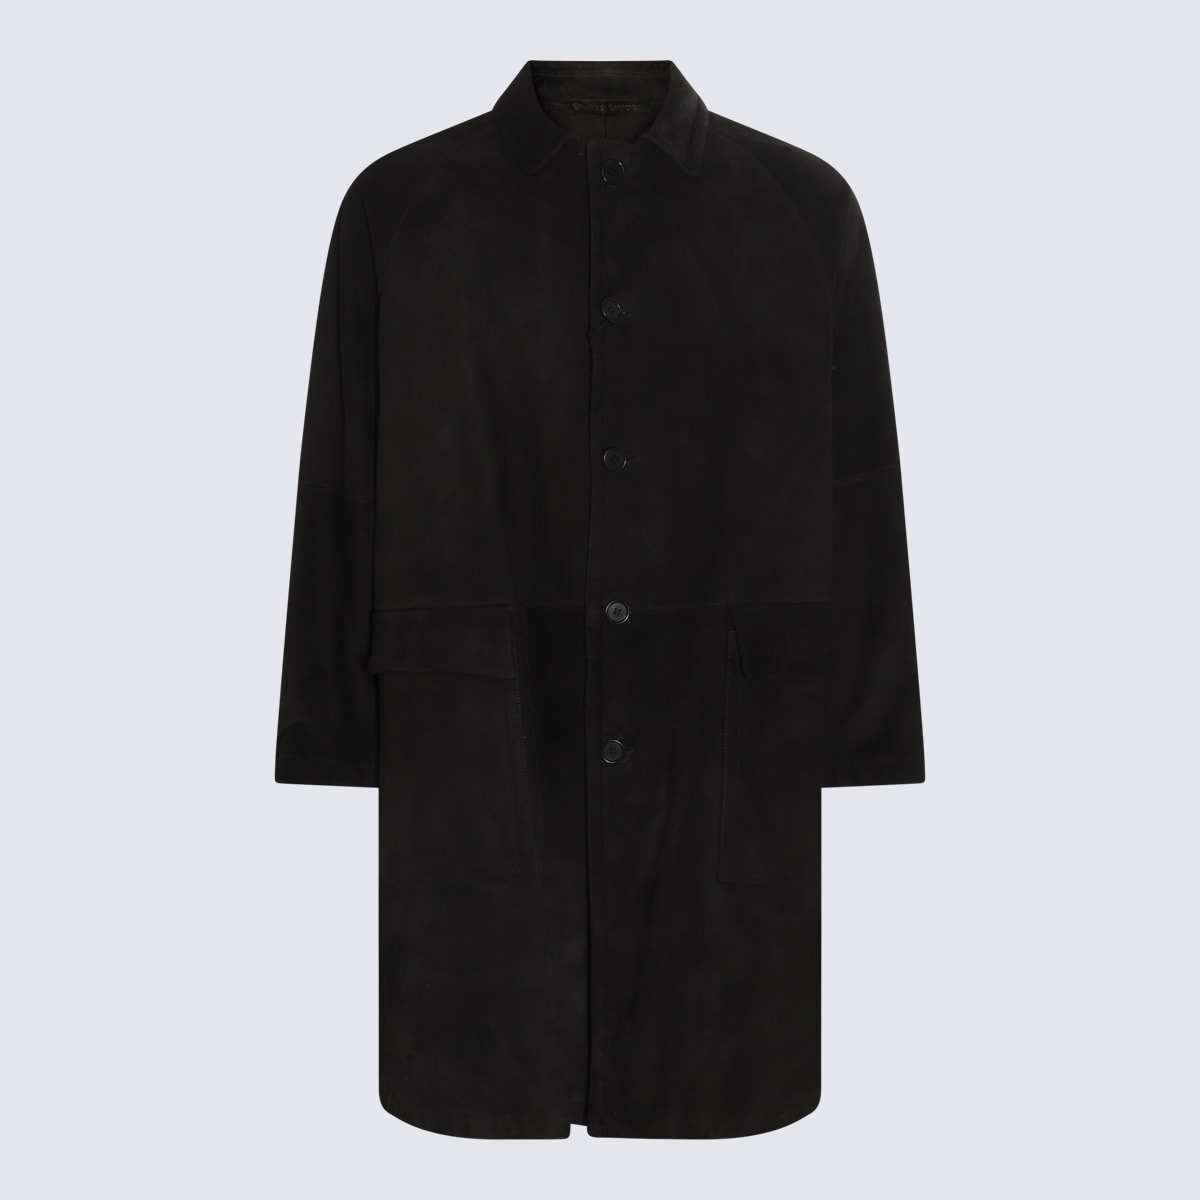 Black Leather Long Coat